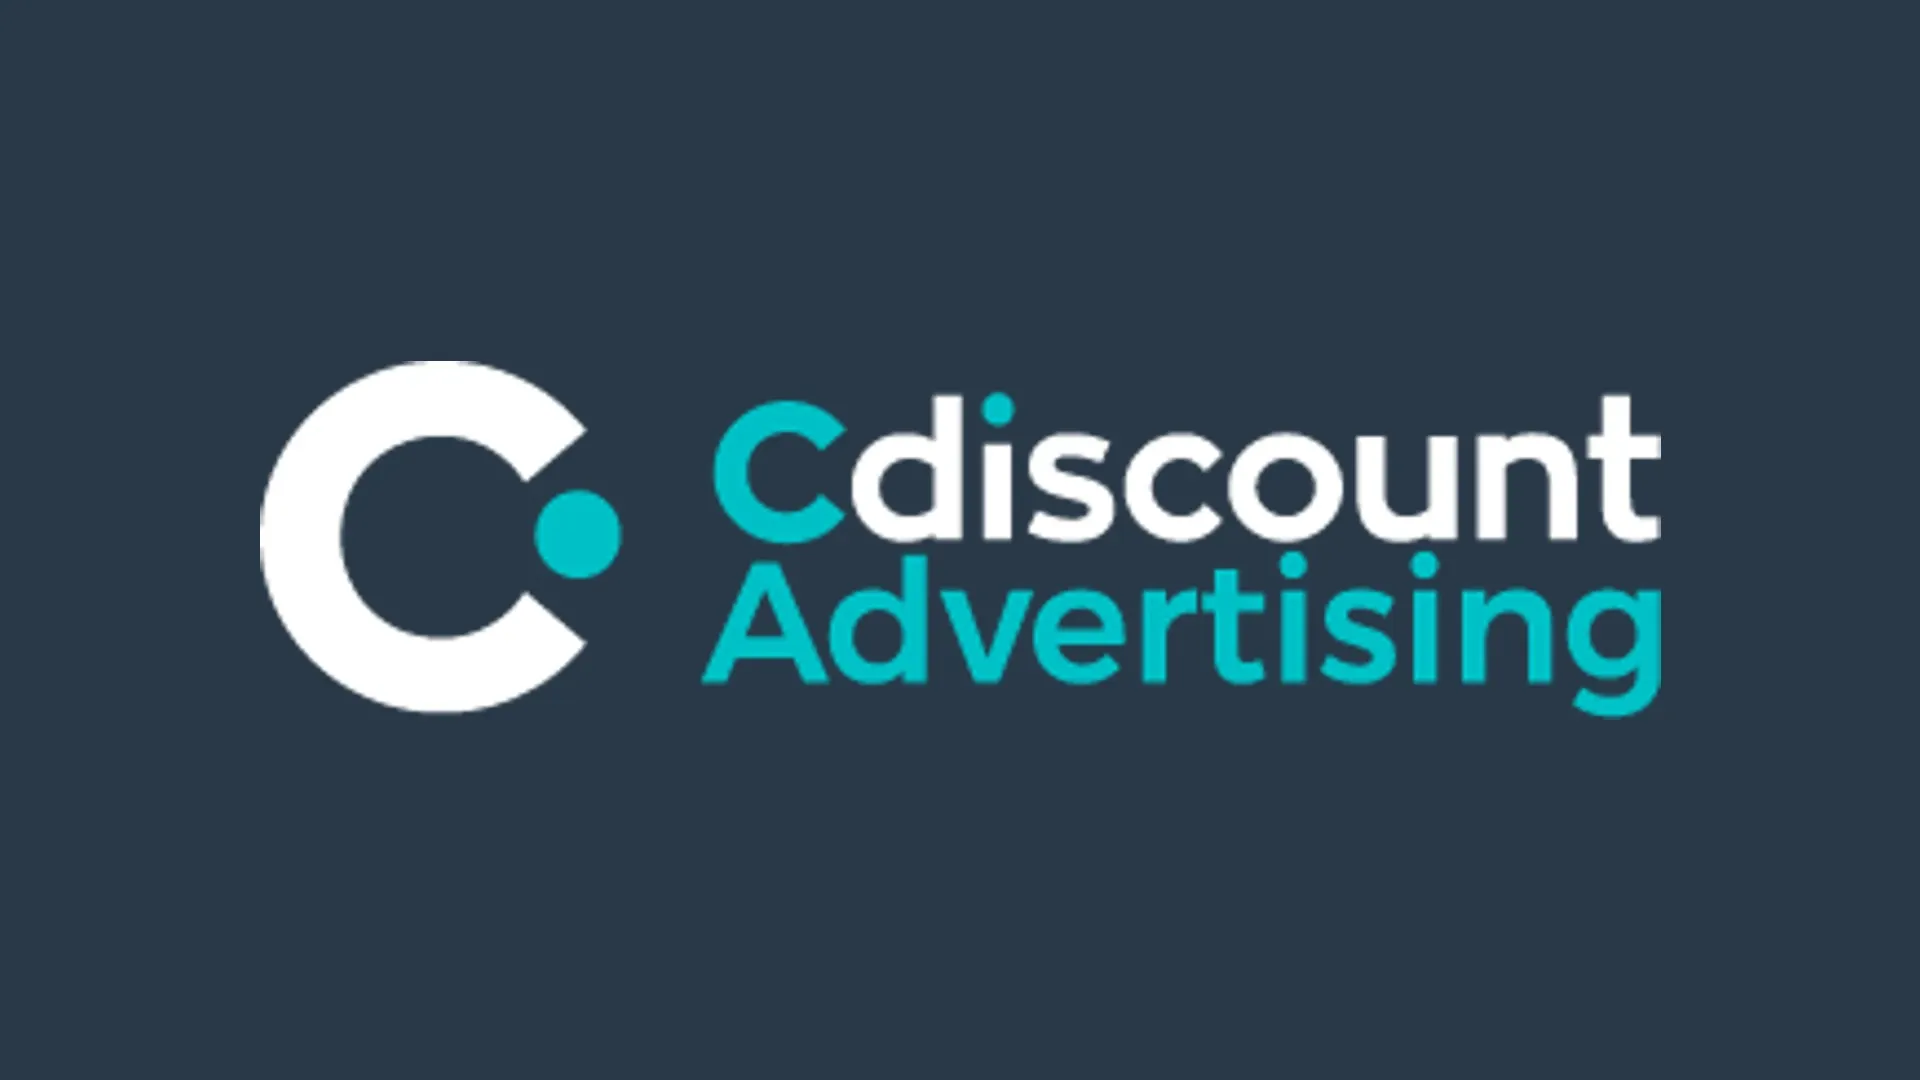 Cdiscount Advertising